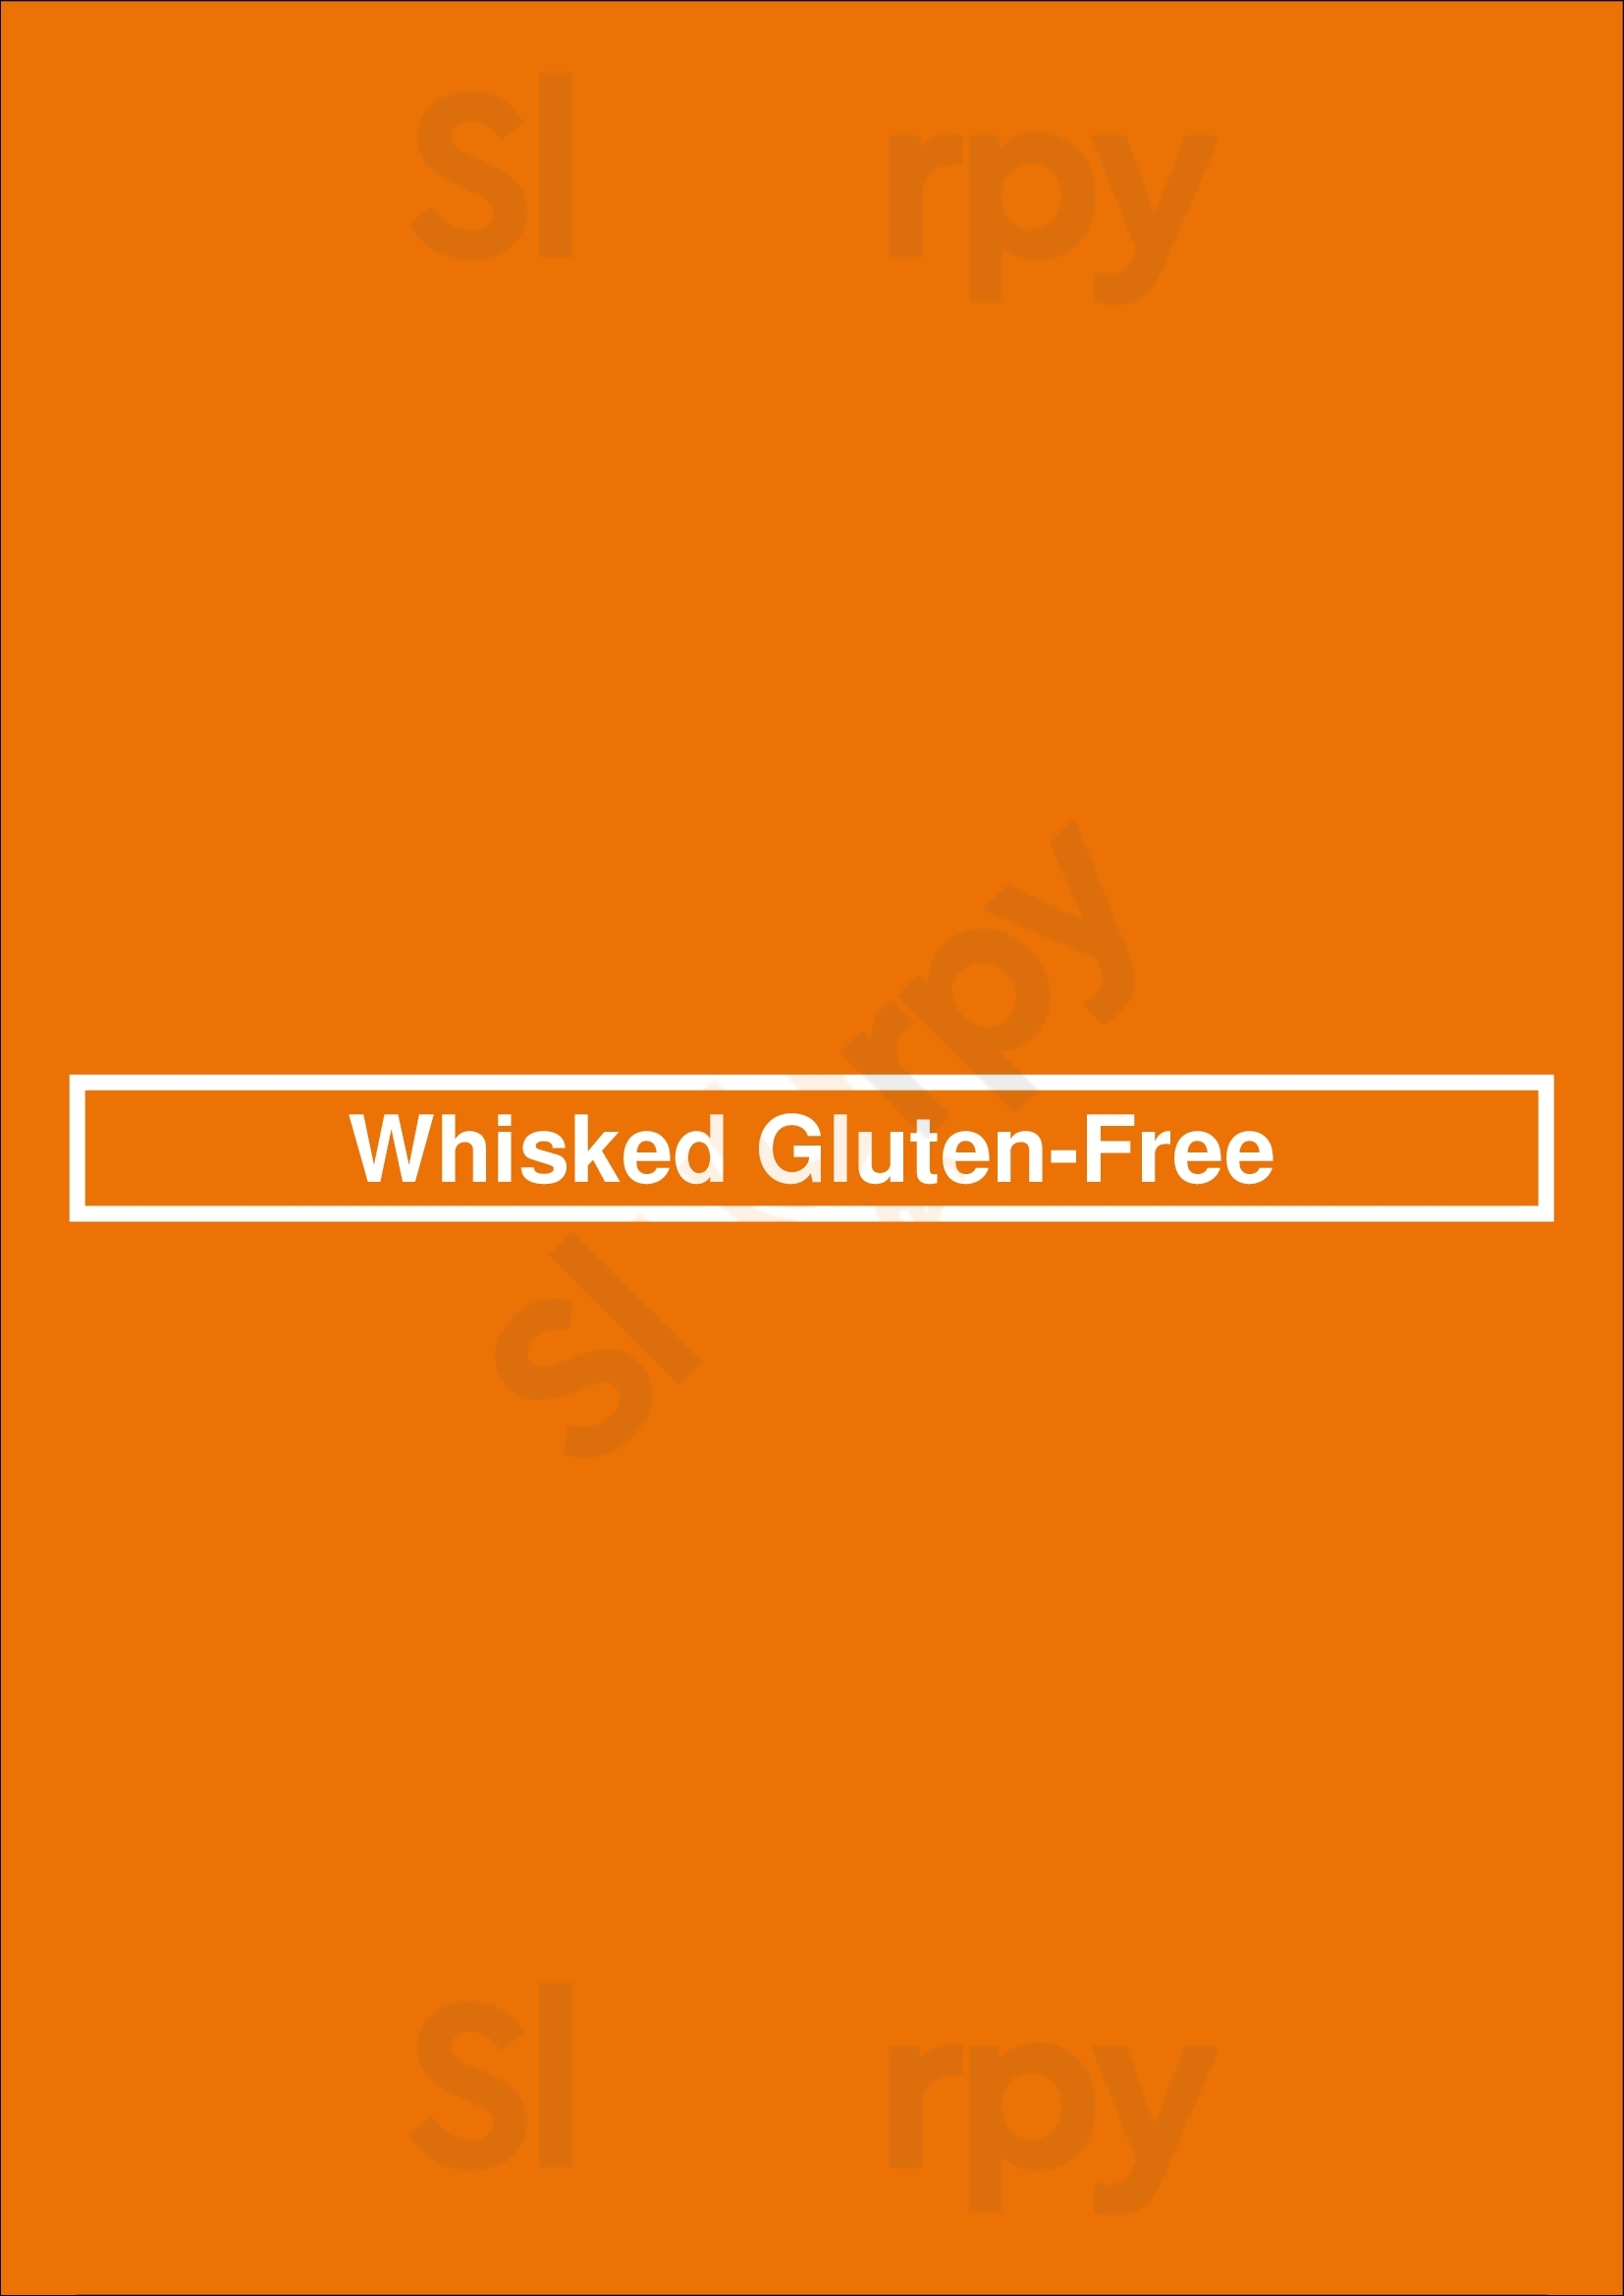 Whisked Gluten-free Toronto Menu - 1